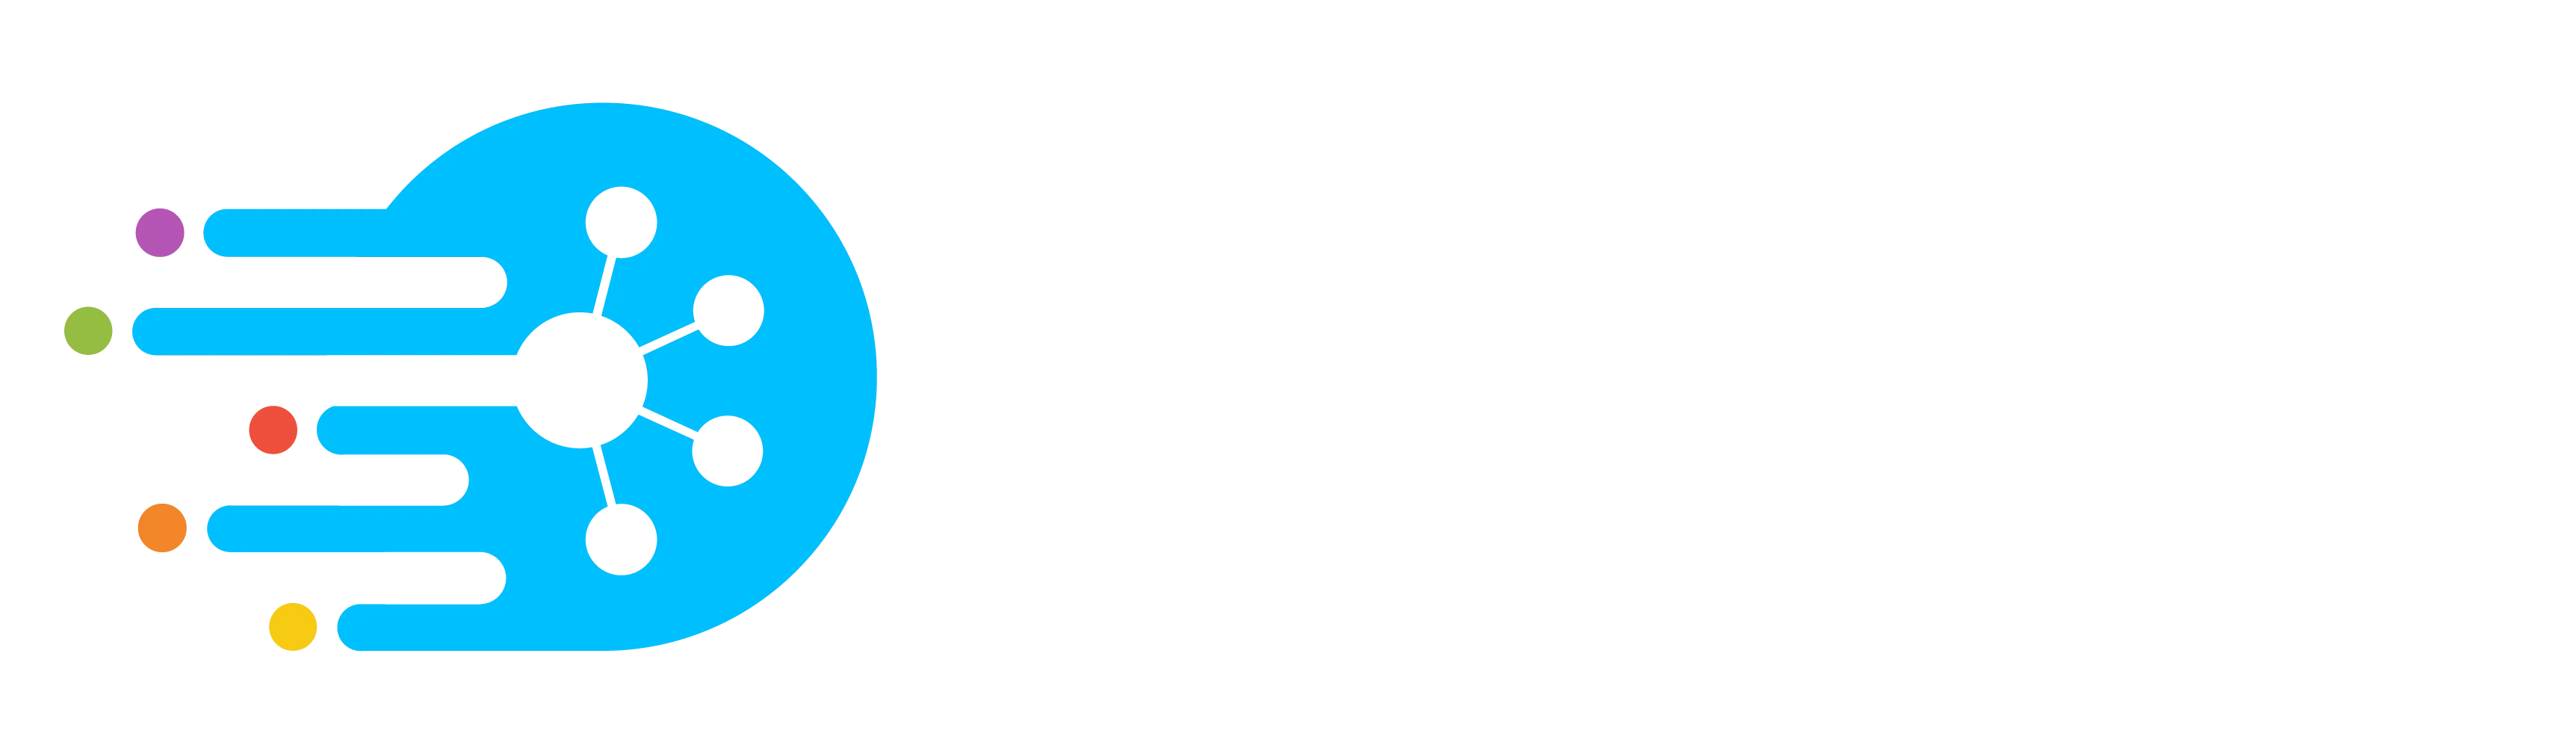 Applied Data Science Partners logo